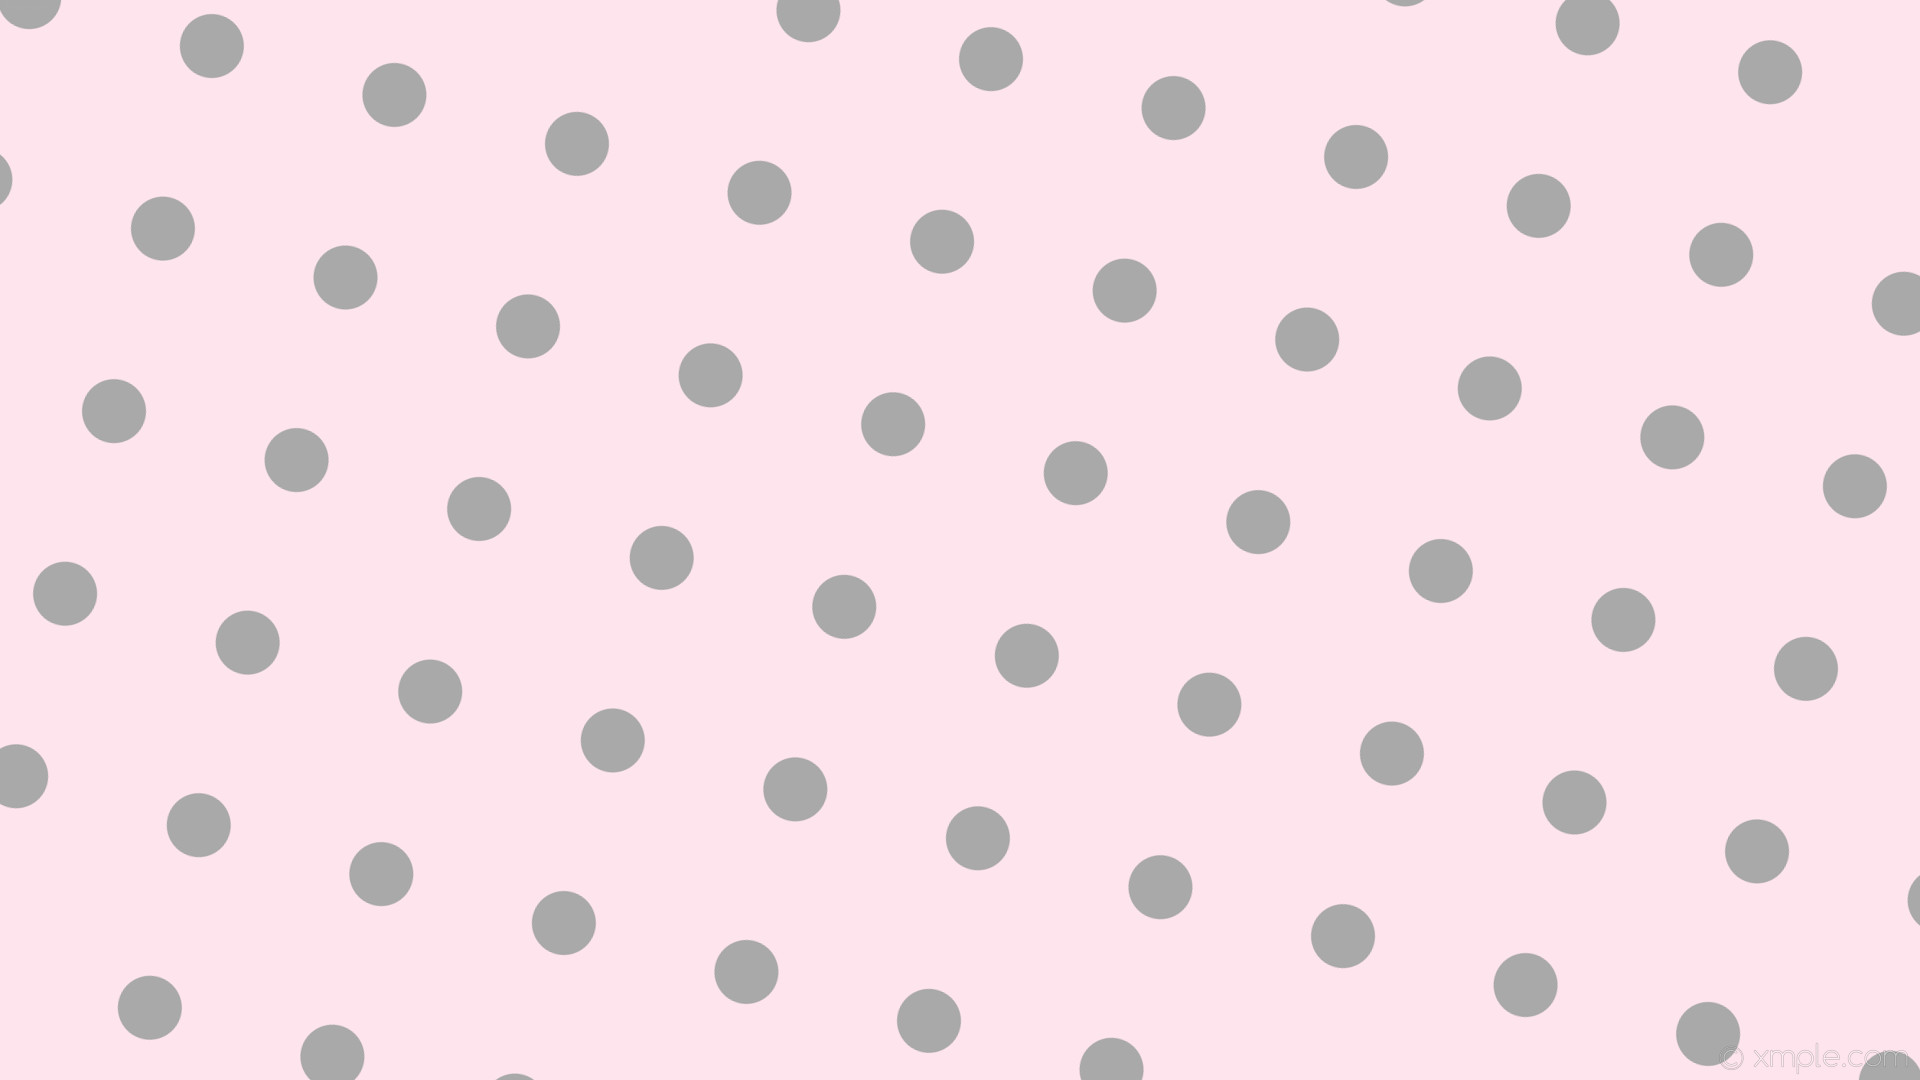 1920x1080 wallpaper dots pink grey polka spots light pink dark gray #fee4ec #a9a9a9  165Â°